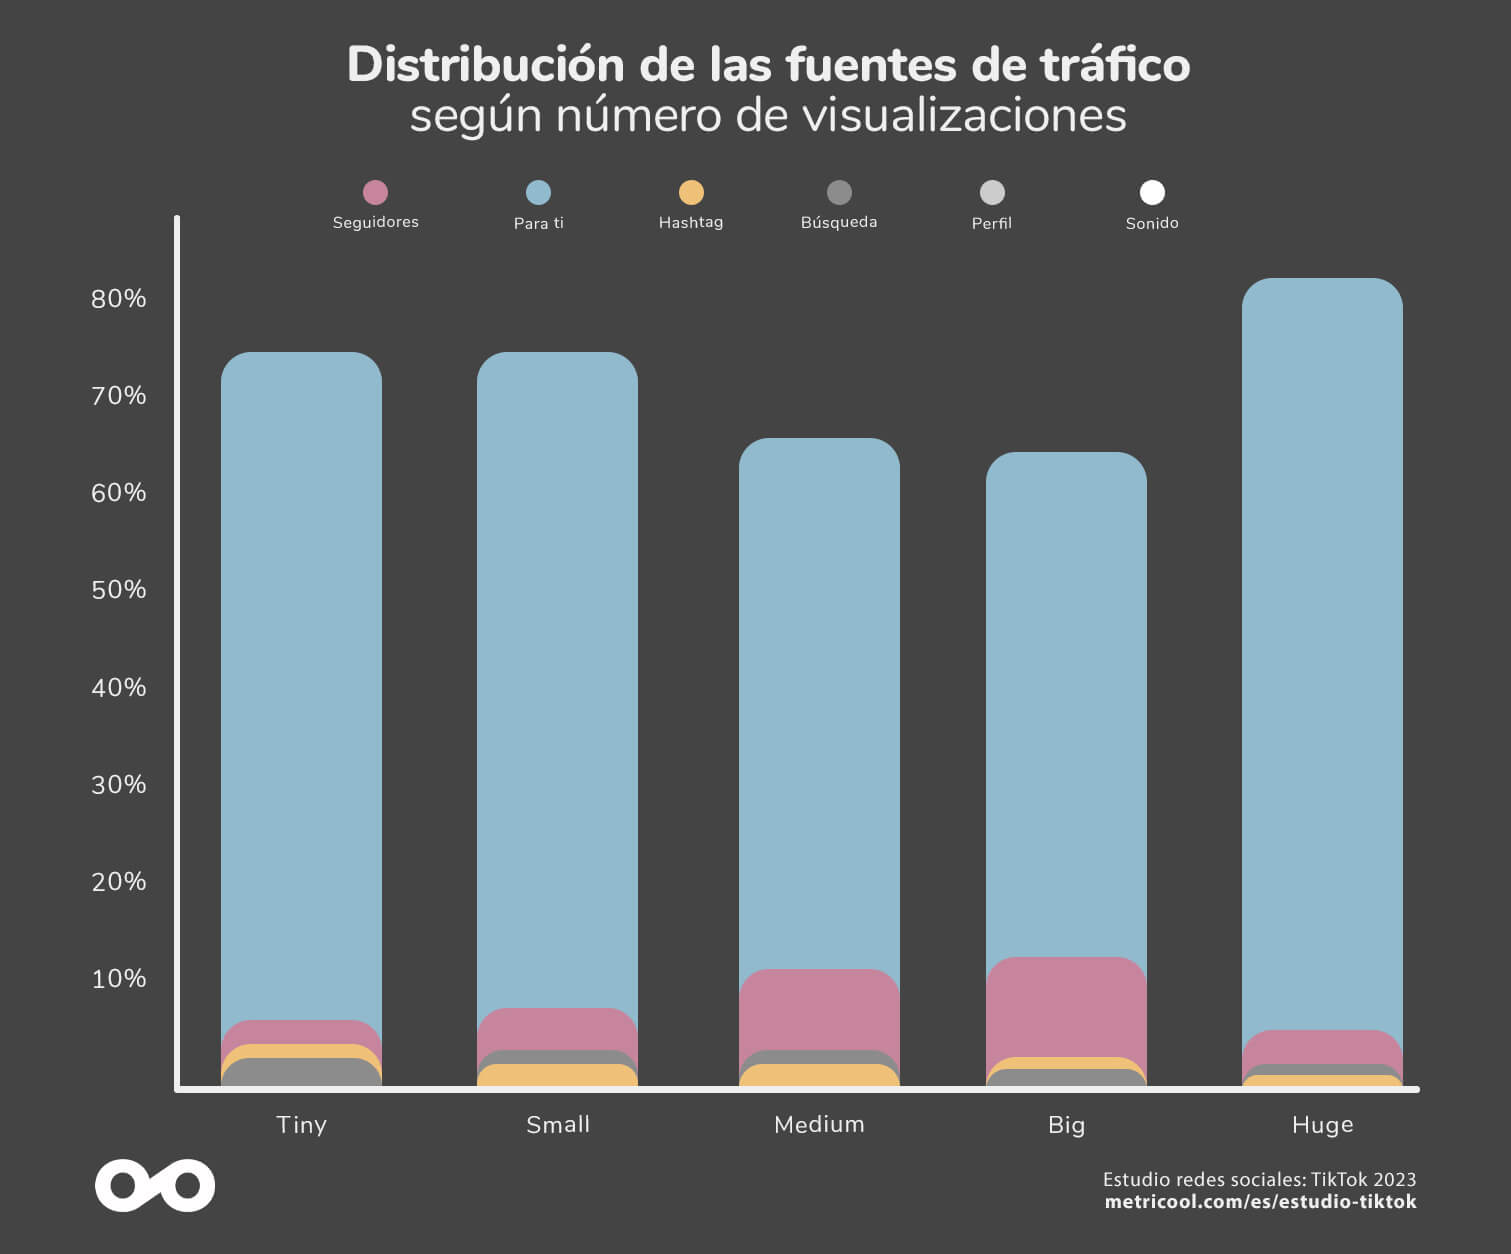 Tiktok-Distribucion-fuente-trafico-segun-visualizaciones